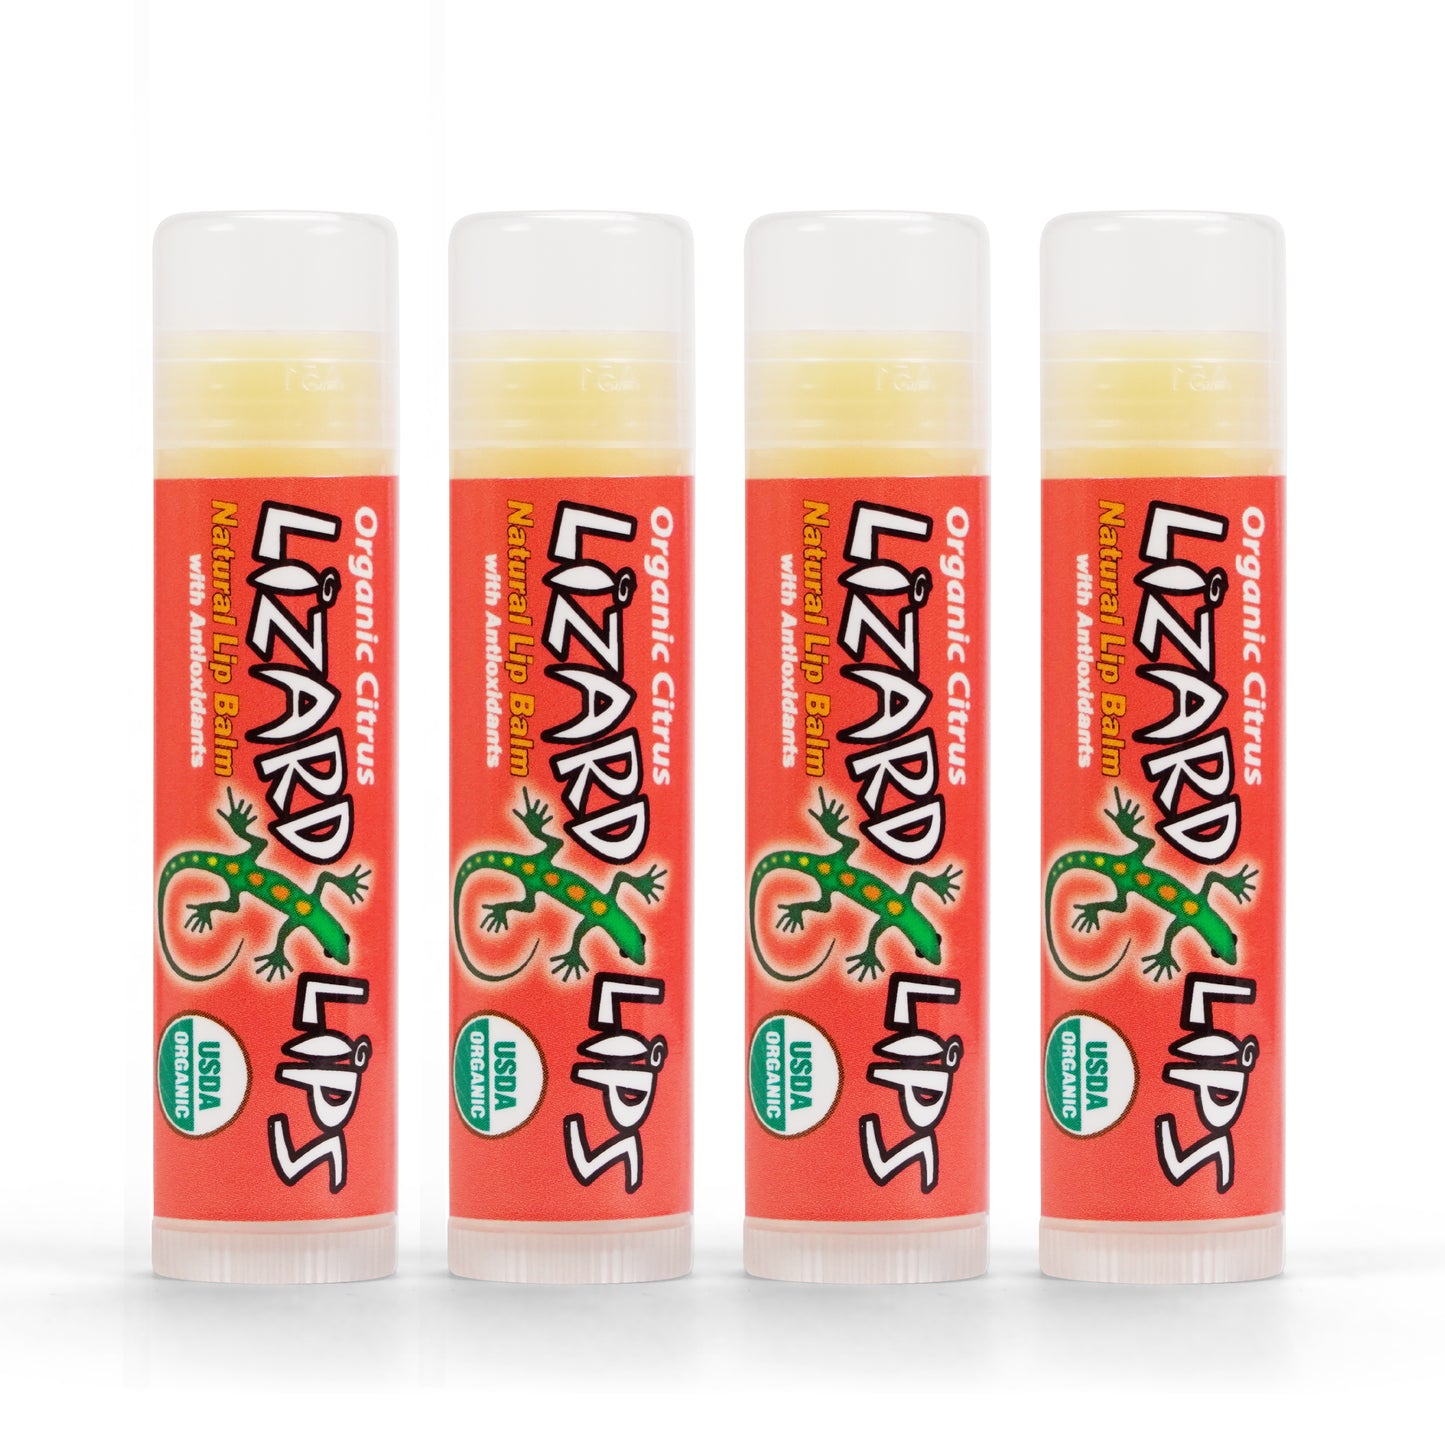 Organic Lip Balms (USDA Certified) - 4 Packs